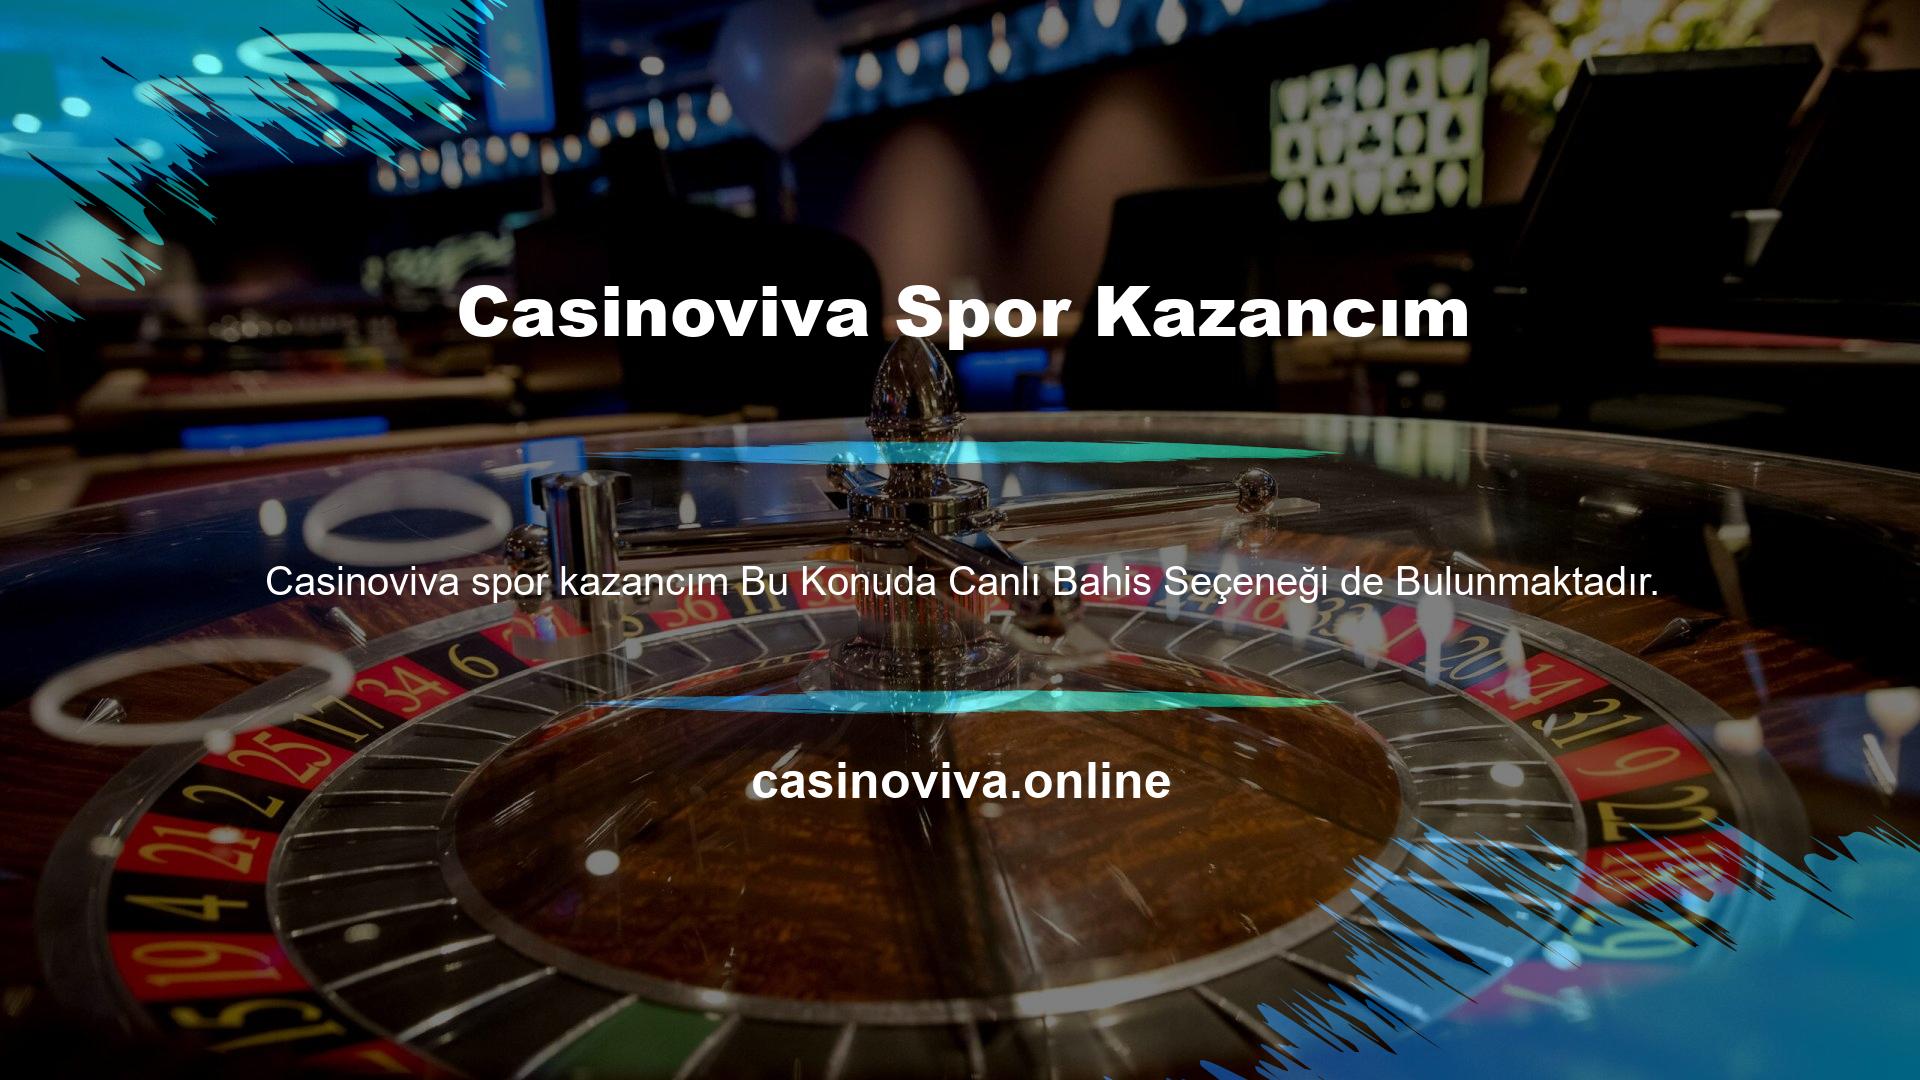 Casinoviva Spor Kazancım